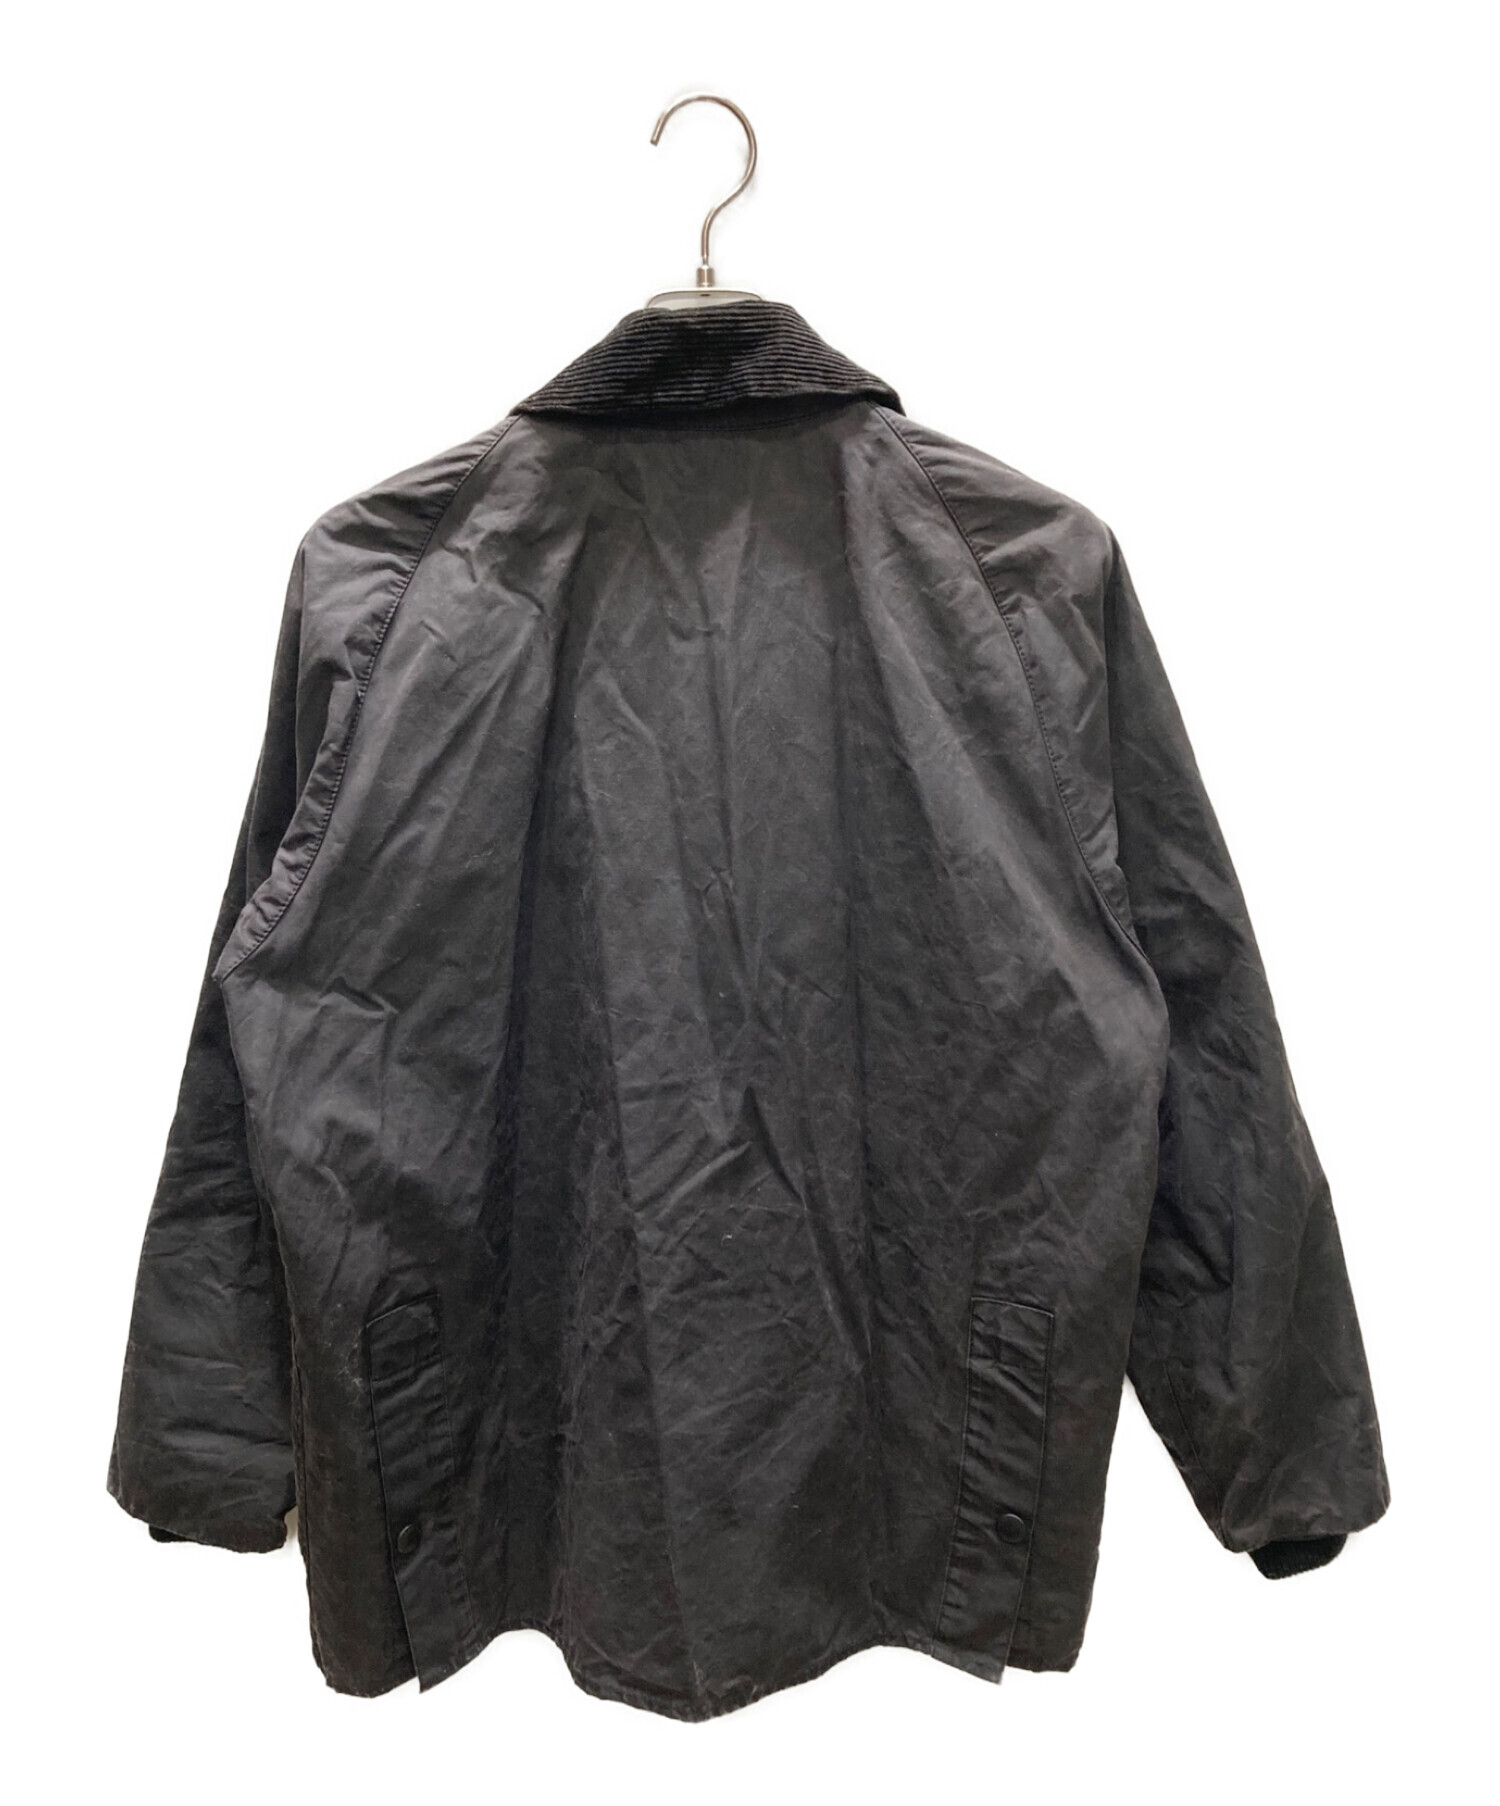 Barbour (バブアー) ビデイルジャケット/A104 BEDALE JACKET ブラック サイズ:C40/102cm